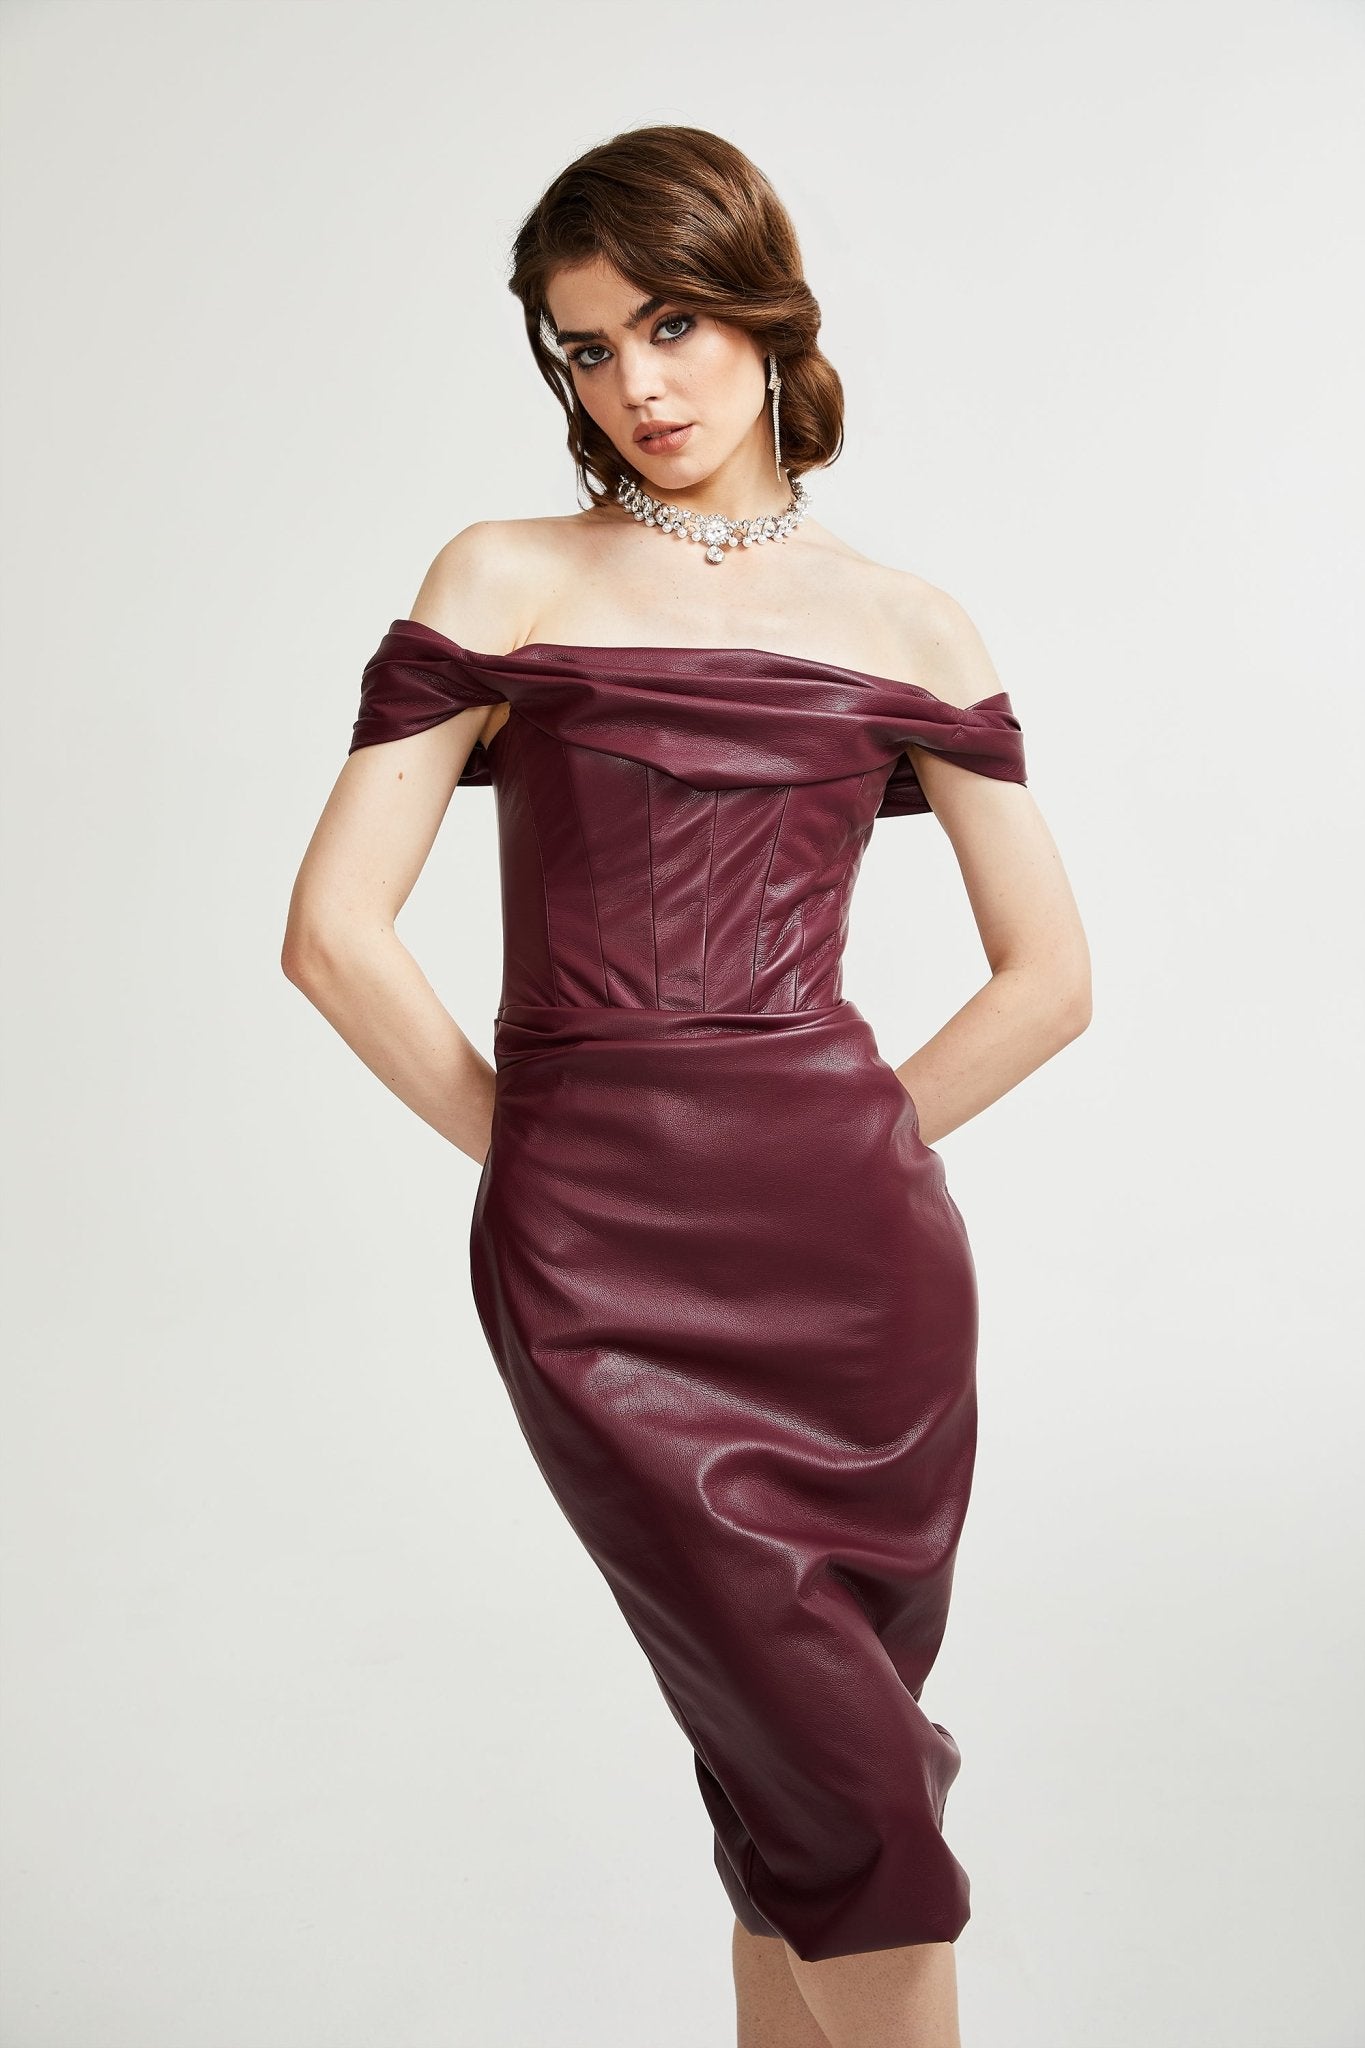 Helkara dress - Miss Rosier - Women's Online Boutique